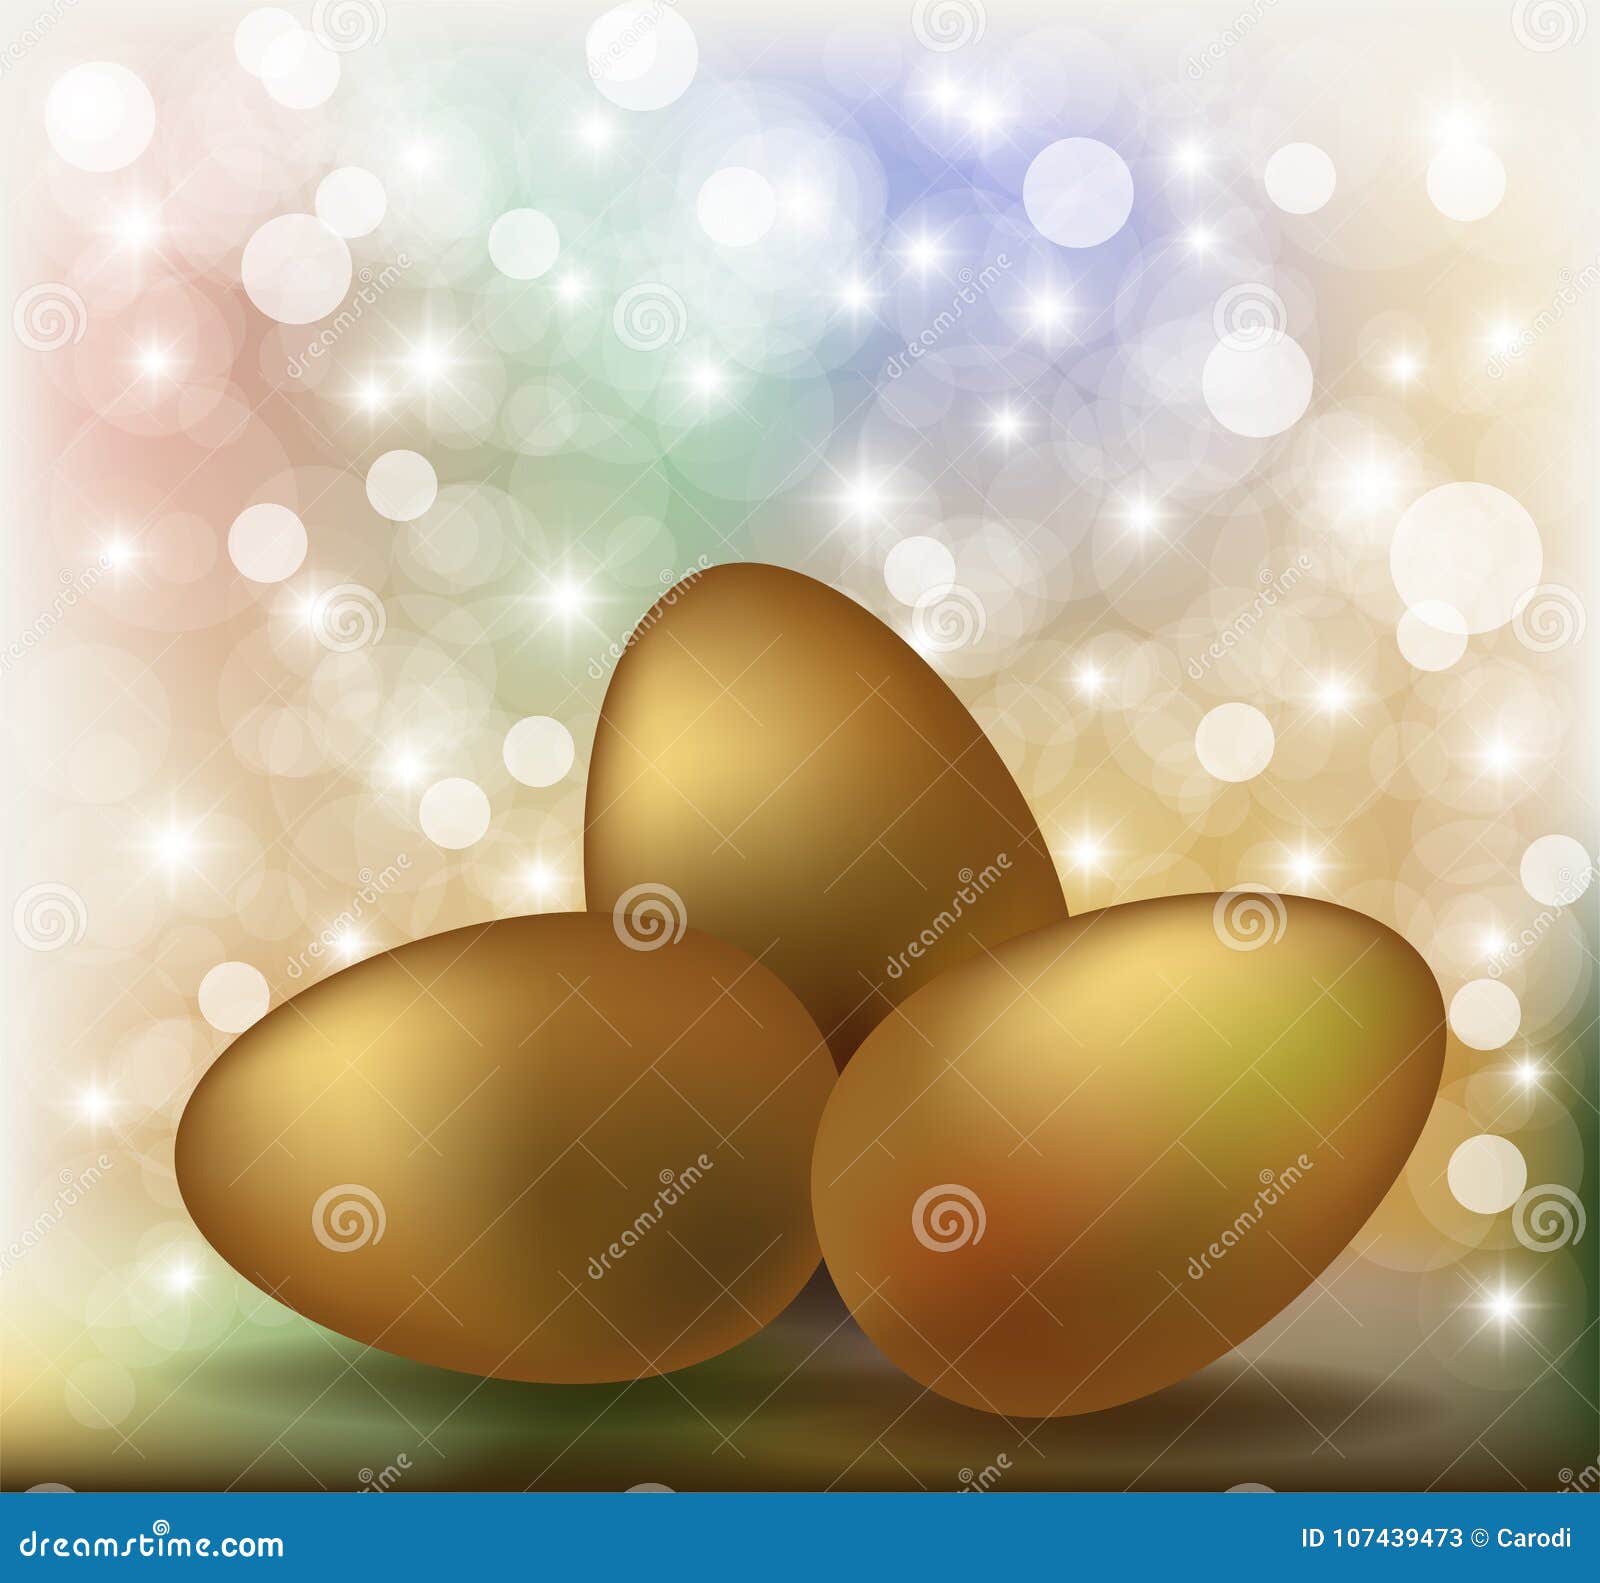 Easter Wallpaper With Golden Eggs Vector Stock Vector Illustration Of Baptism Background